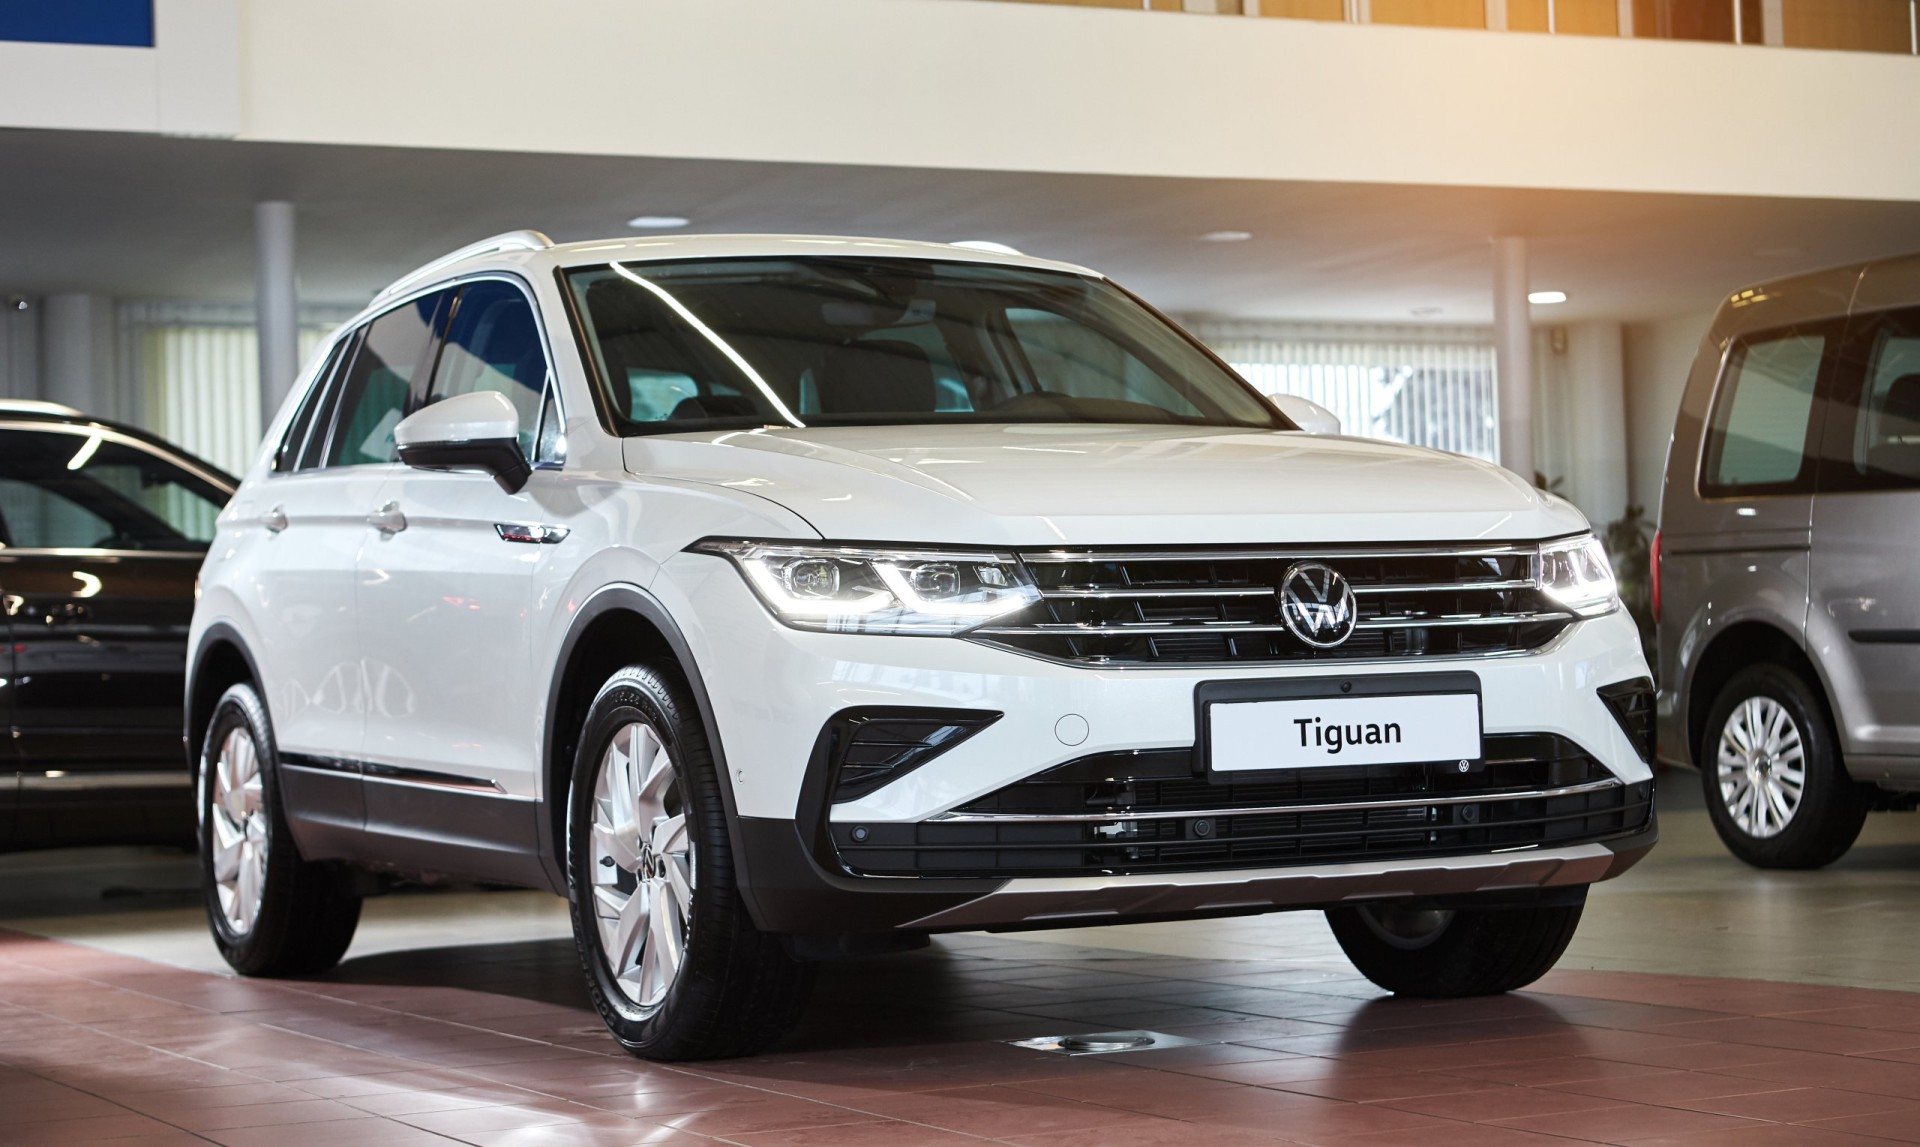 Volkswagen Tiguan 2021 - new model car presentation in showroom - side view